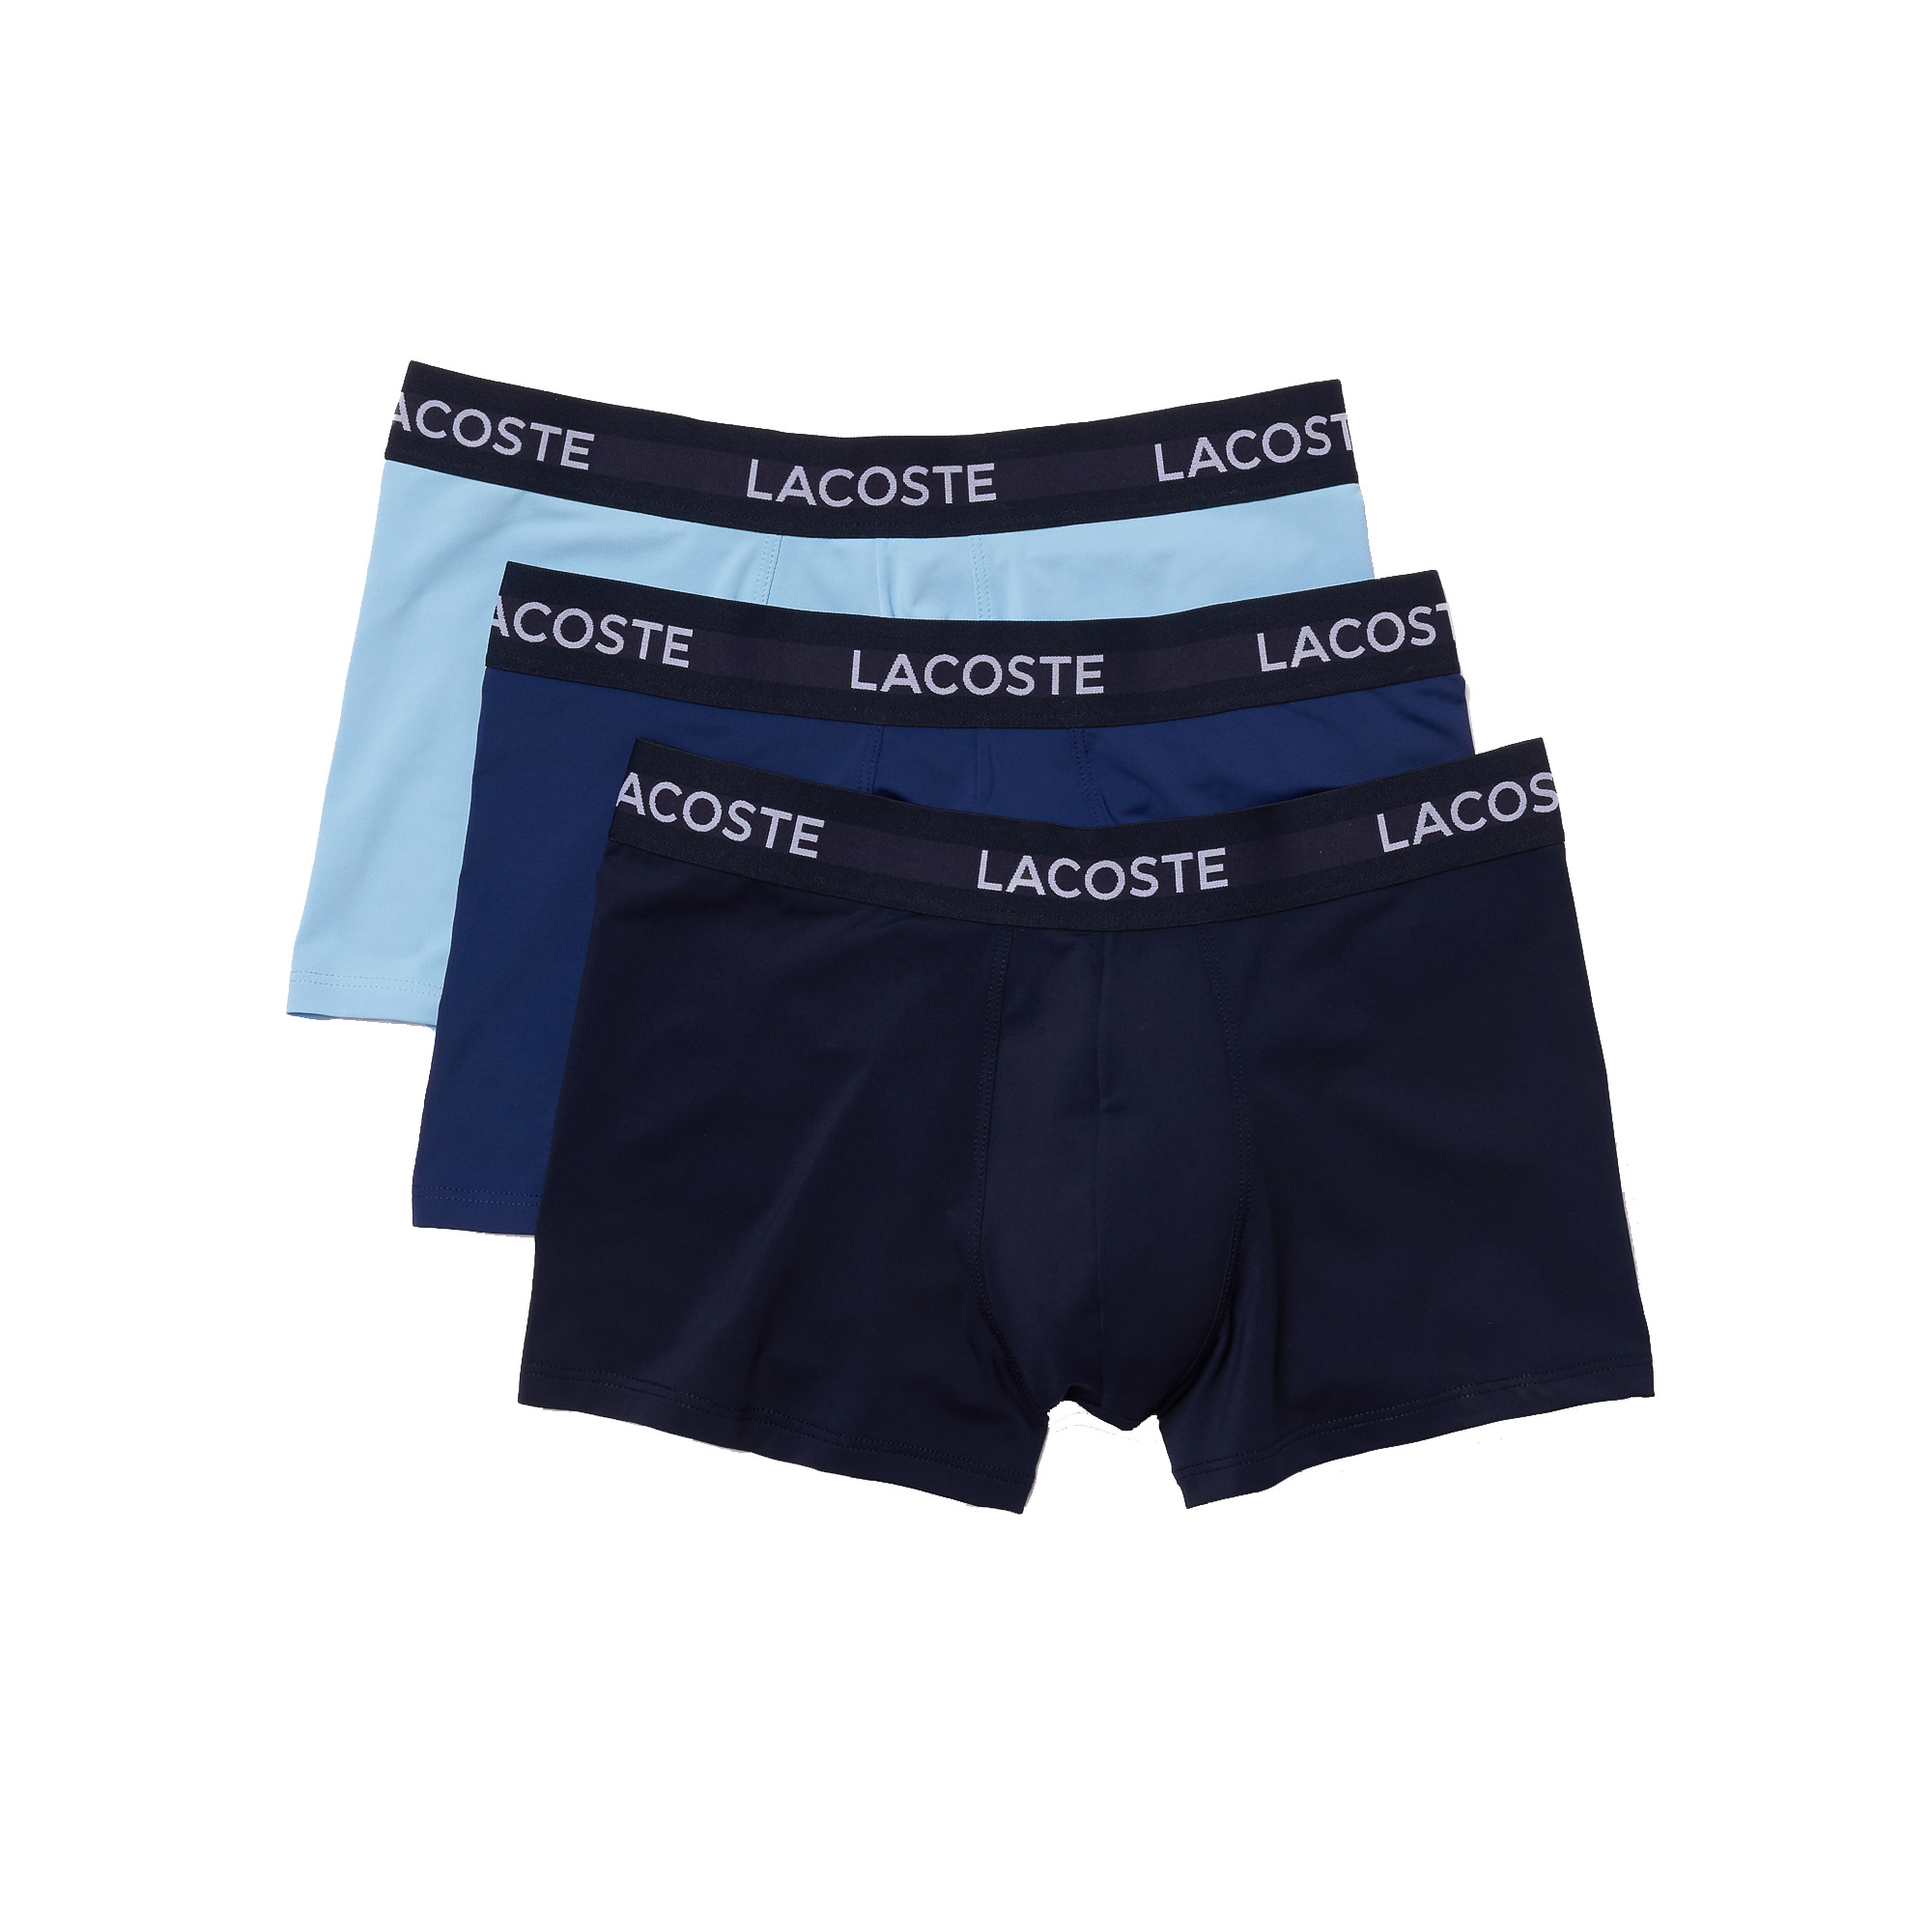 Lacoste Men's 3-Pack Regular Fit Boxers